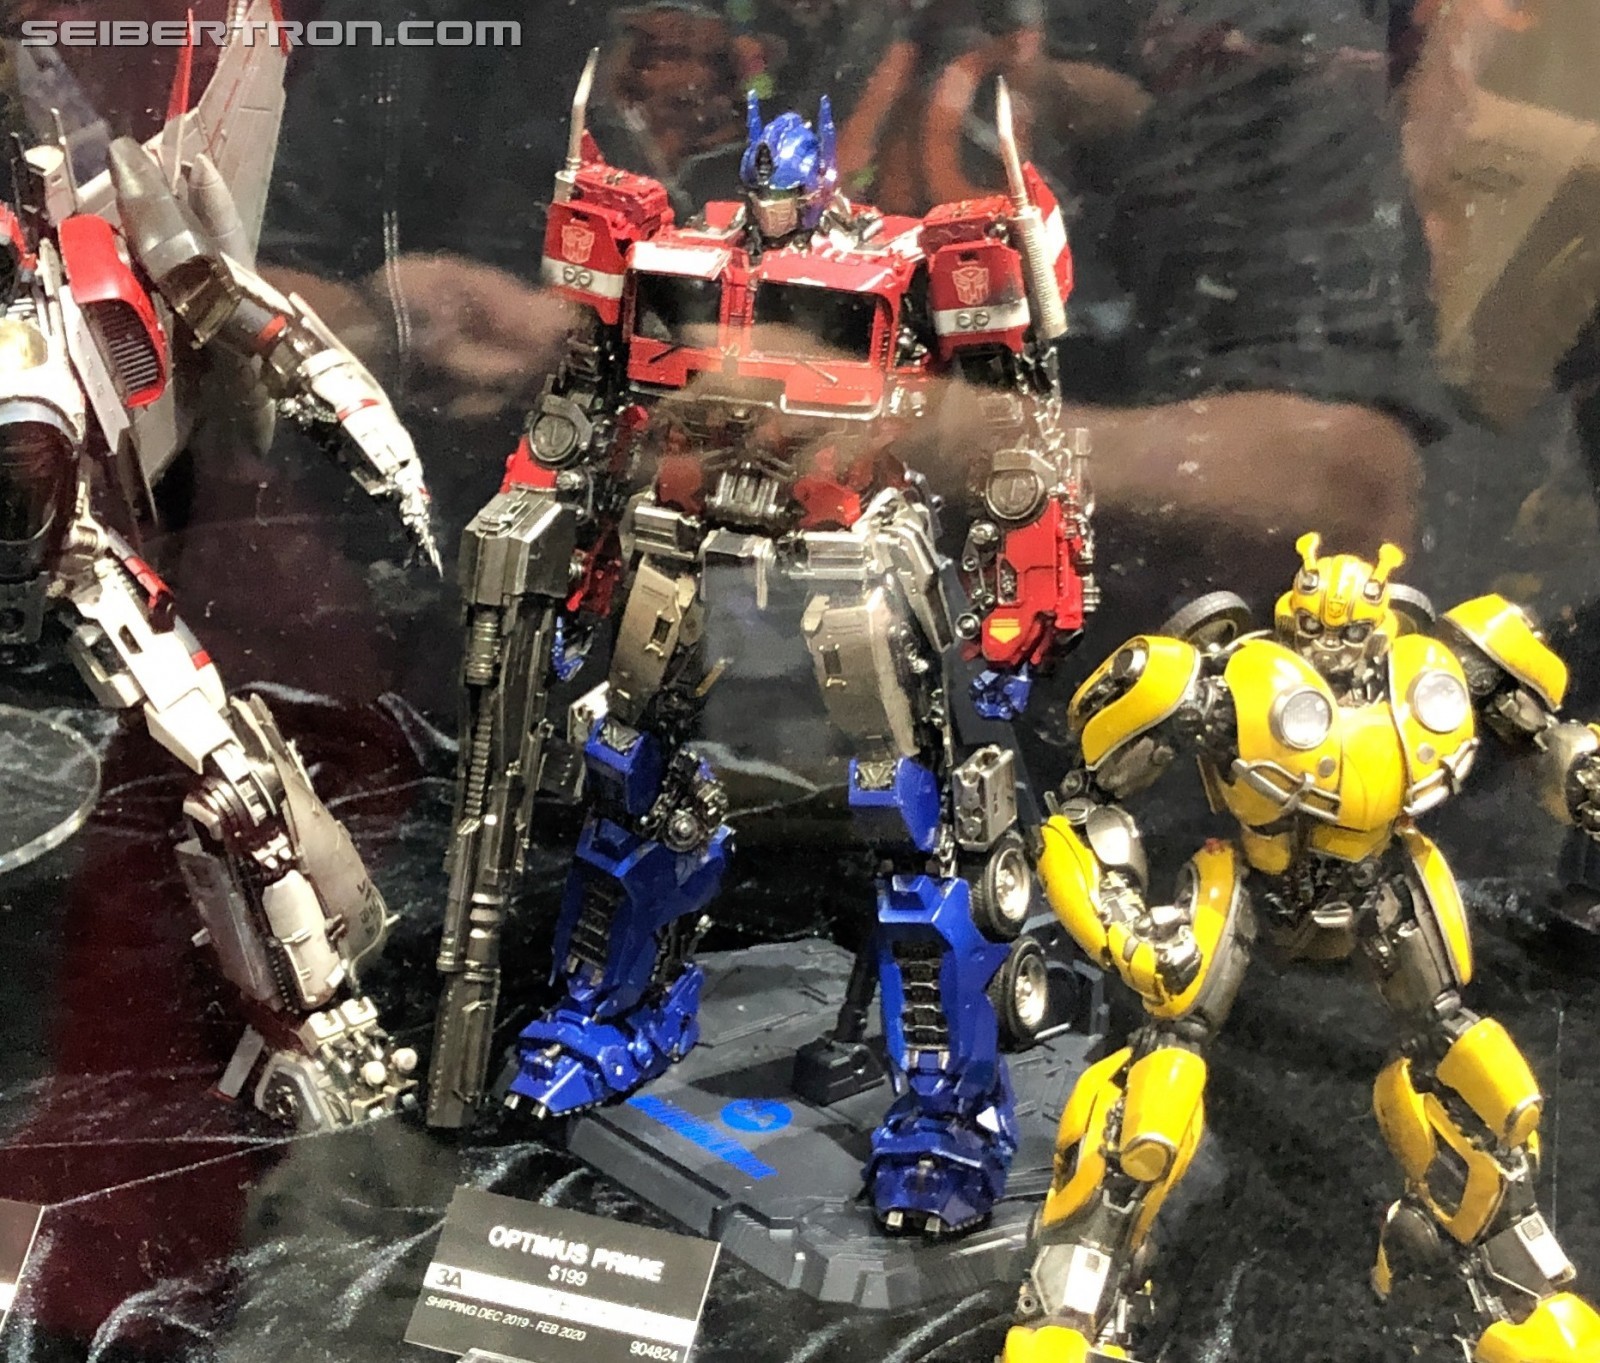 3a transformers bumblebee dlx optimus prime